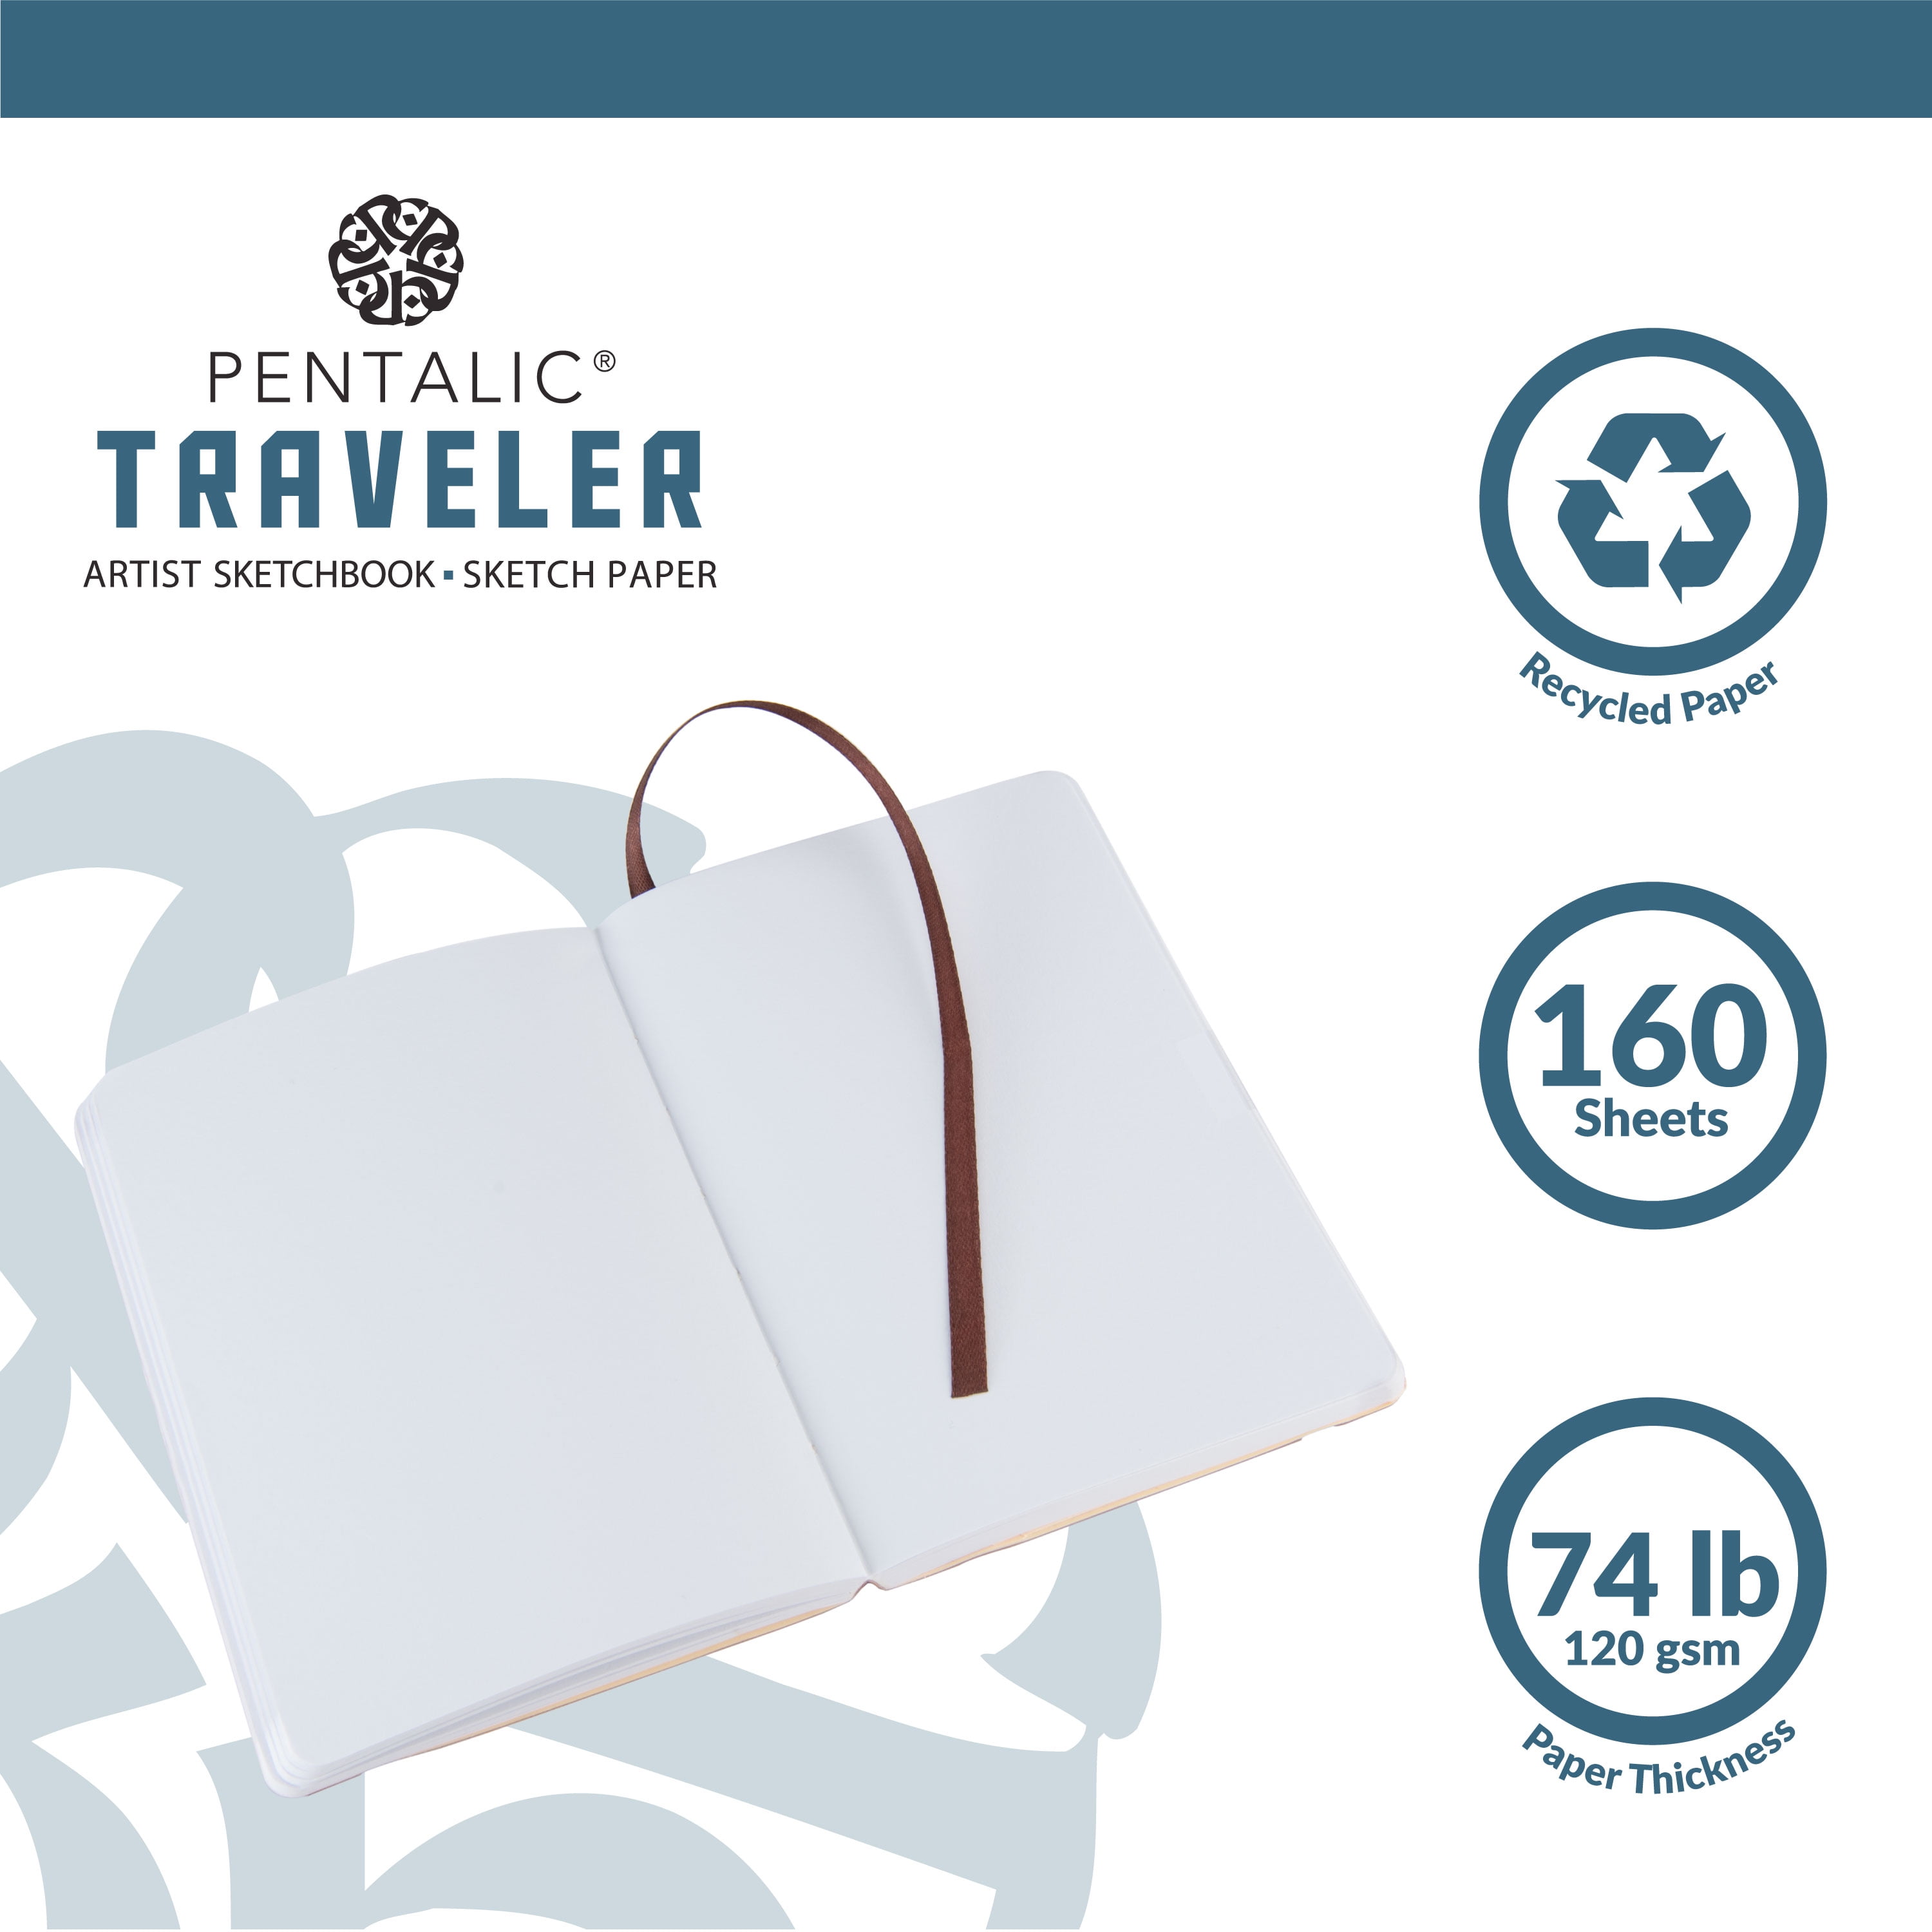 Pentalic 6 x 8 Pocket Sketchbook Traveler Journal, 160 Pages, Turquoise